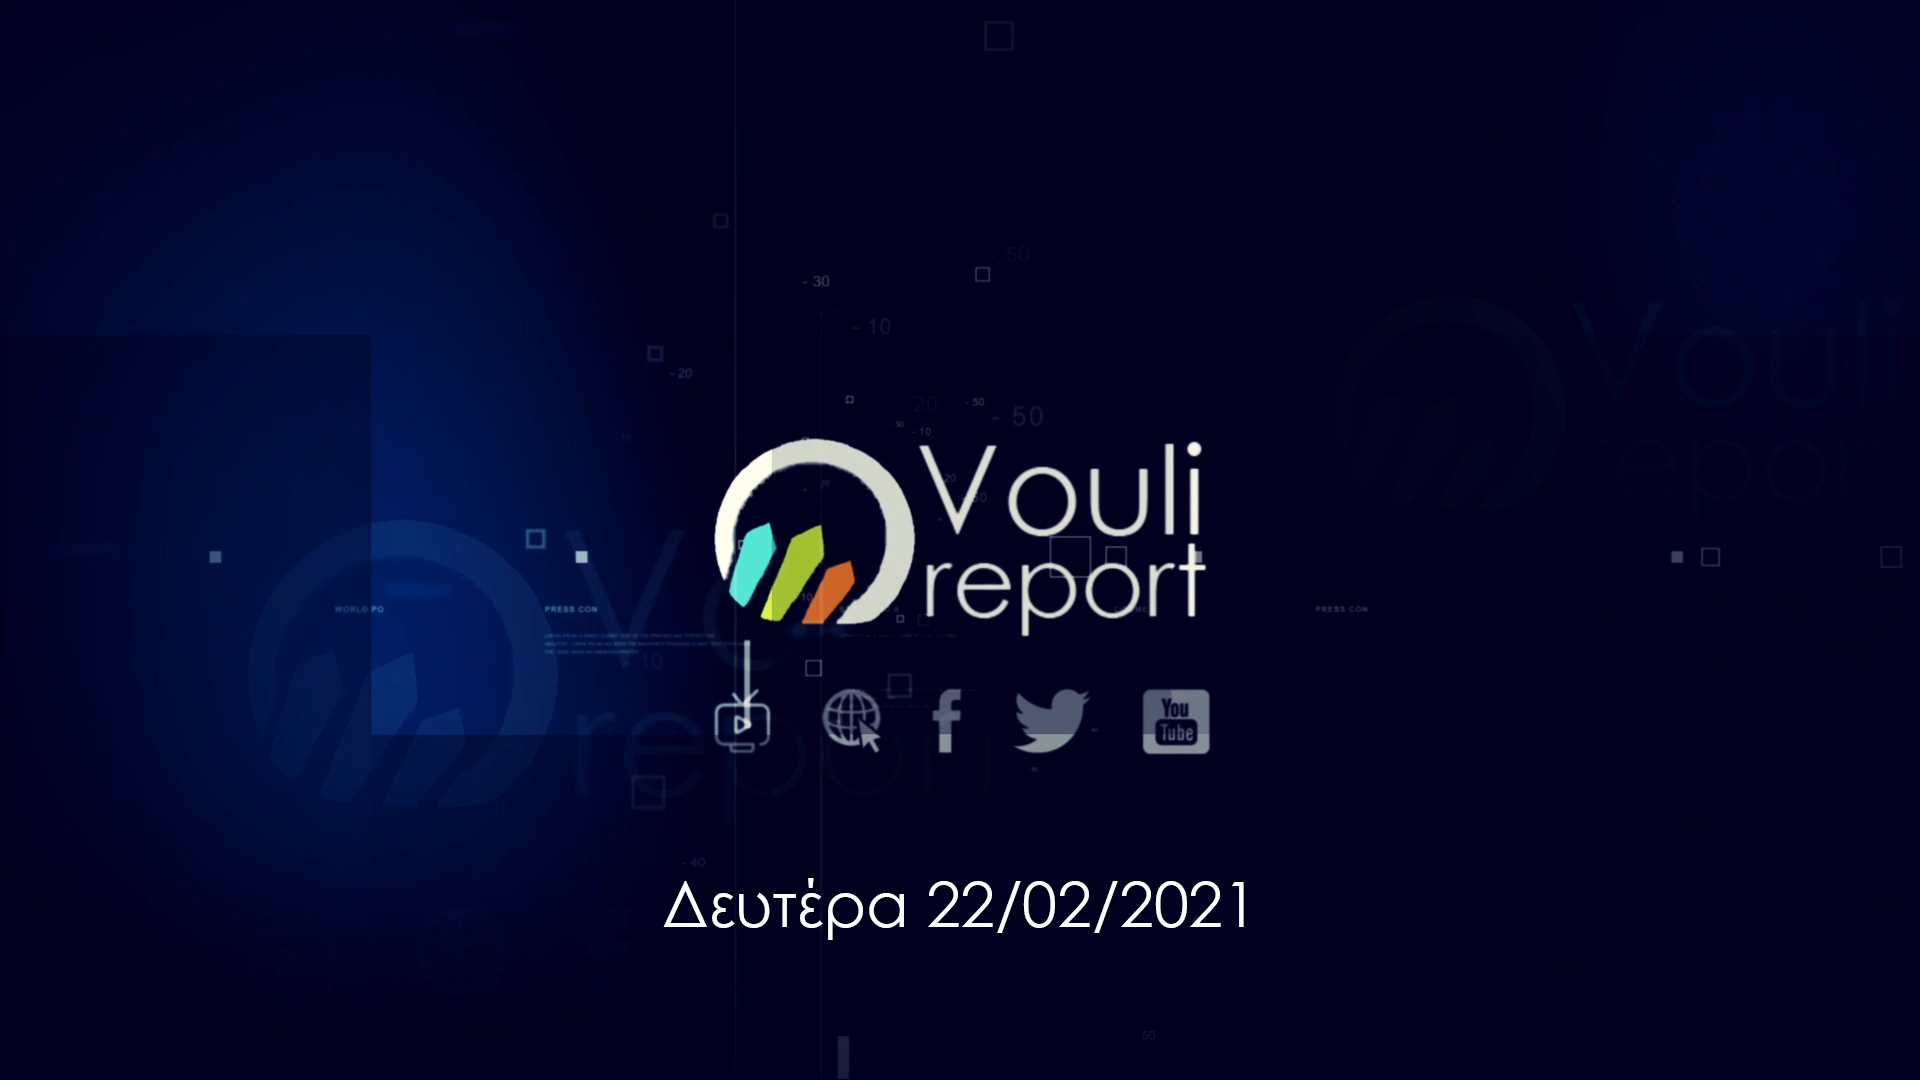 Vouli report | 22/02/2021